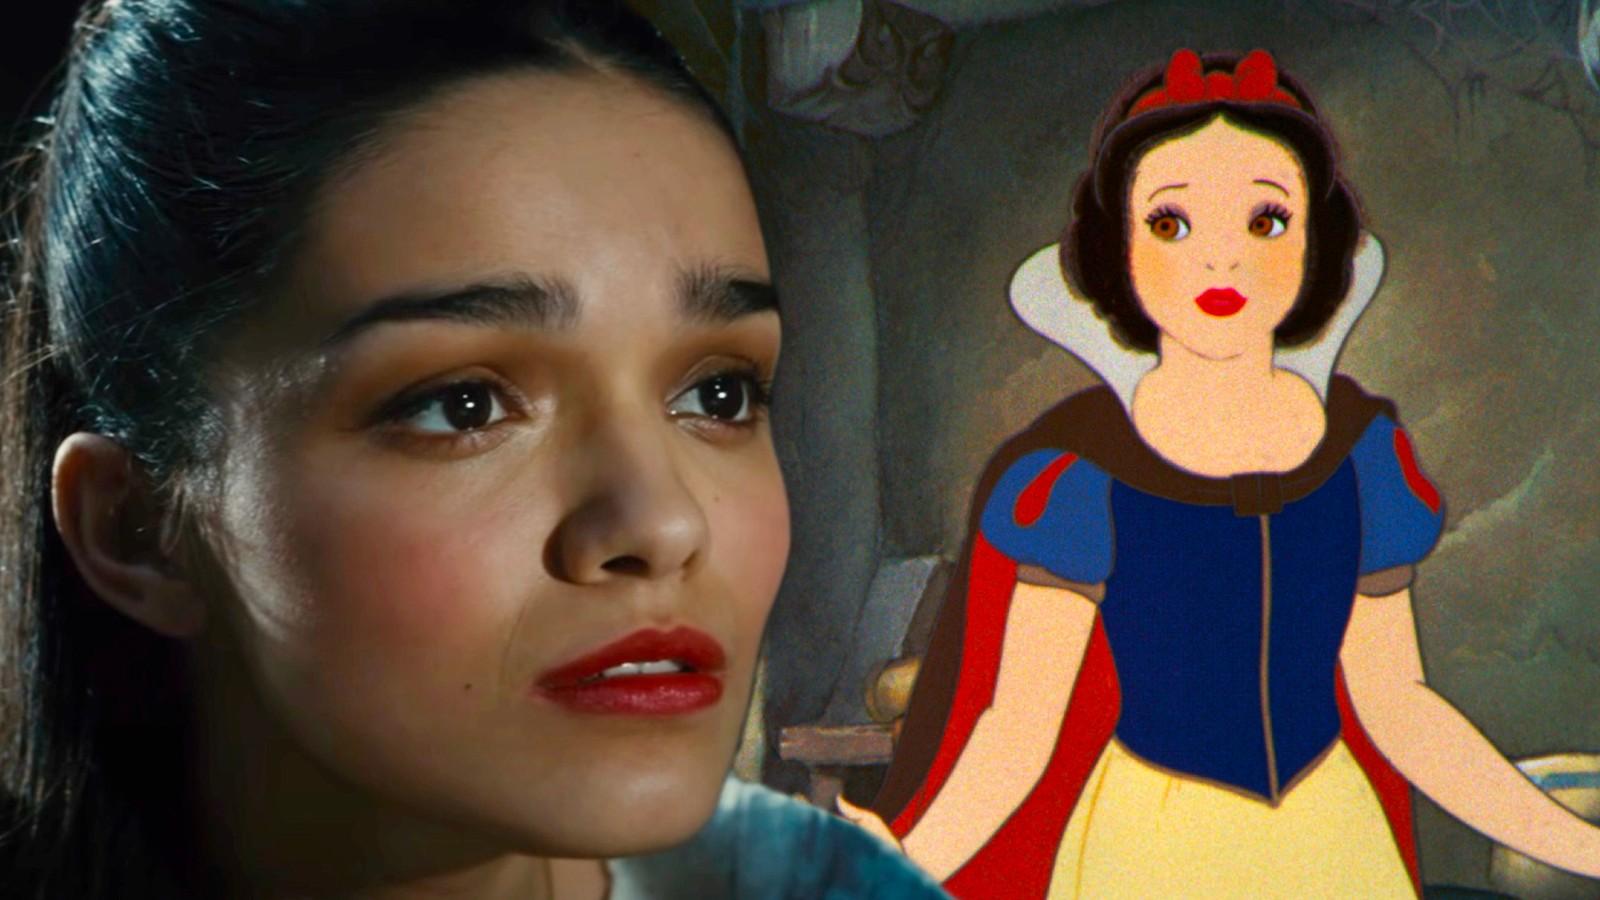 Still of Rachel Zegler in West Side Story and still of original Snow White by Disney